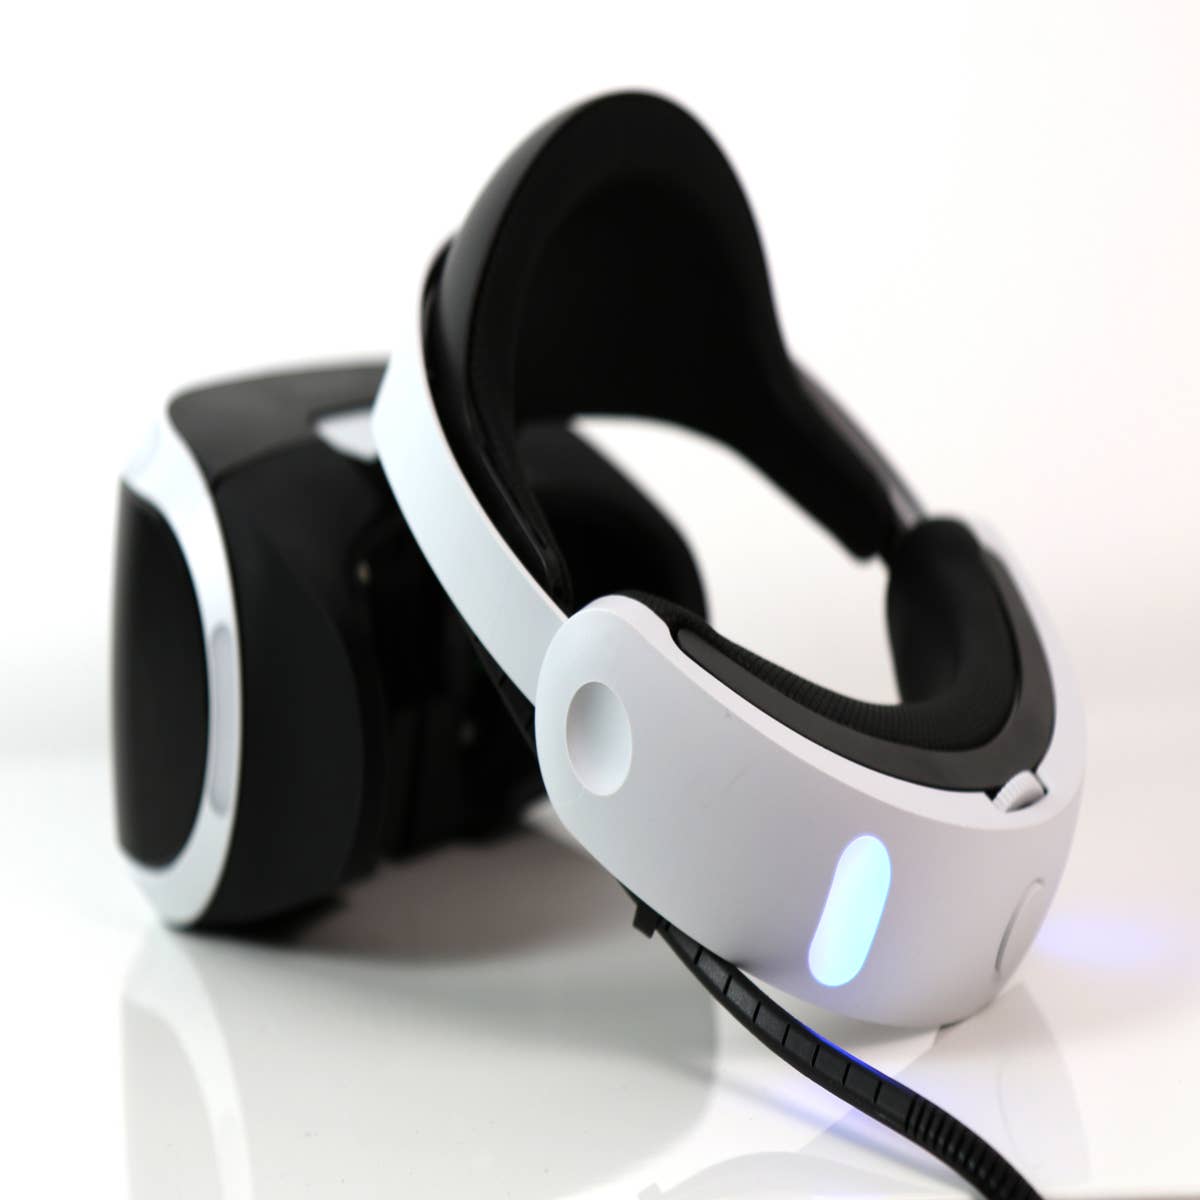 PlayStation VR 2 review: Stress-free virtual reality